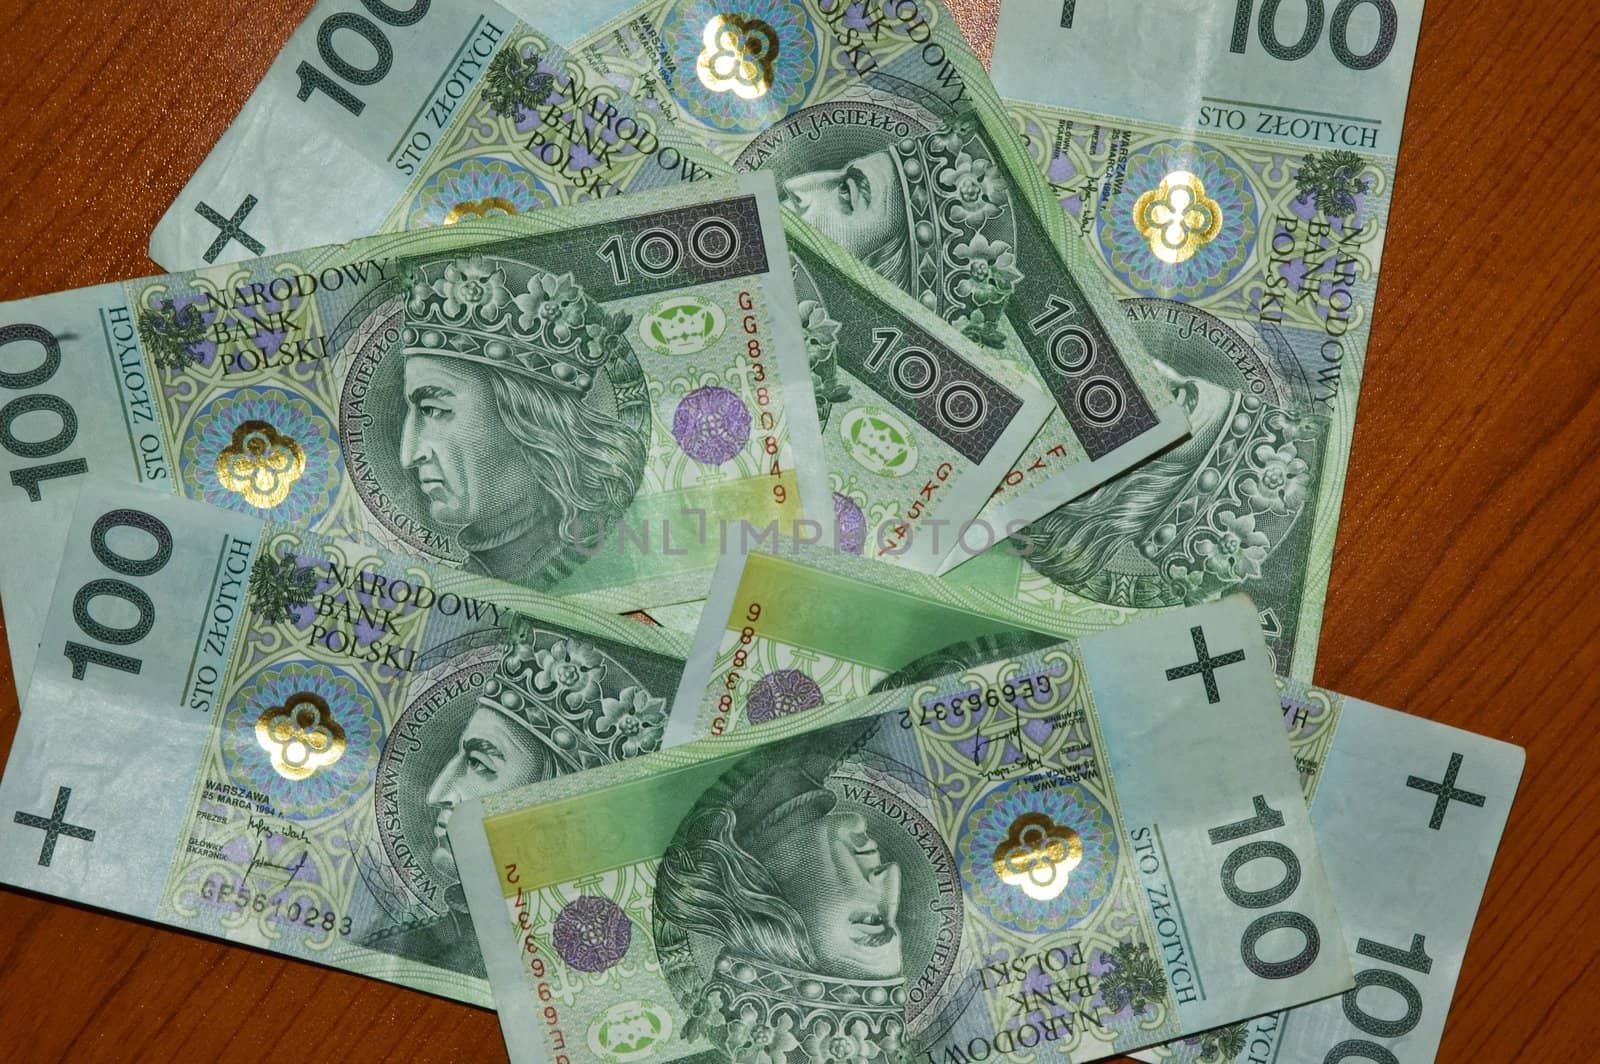 Polish money on table